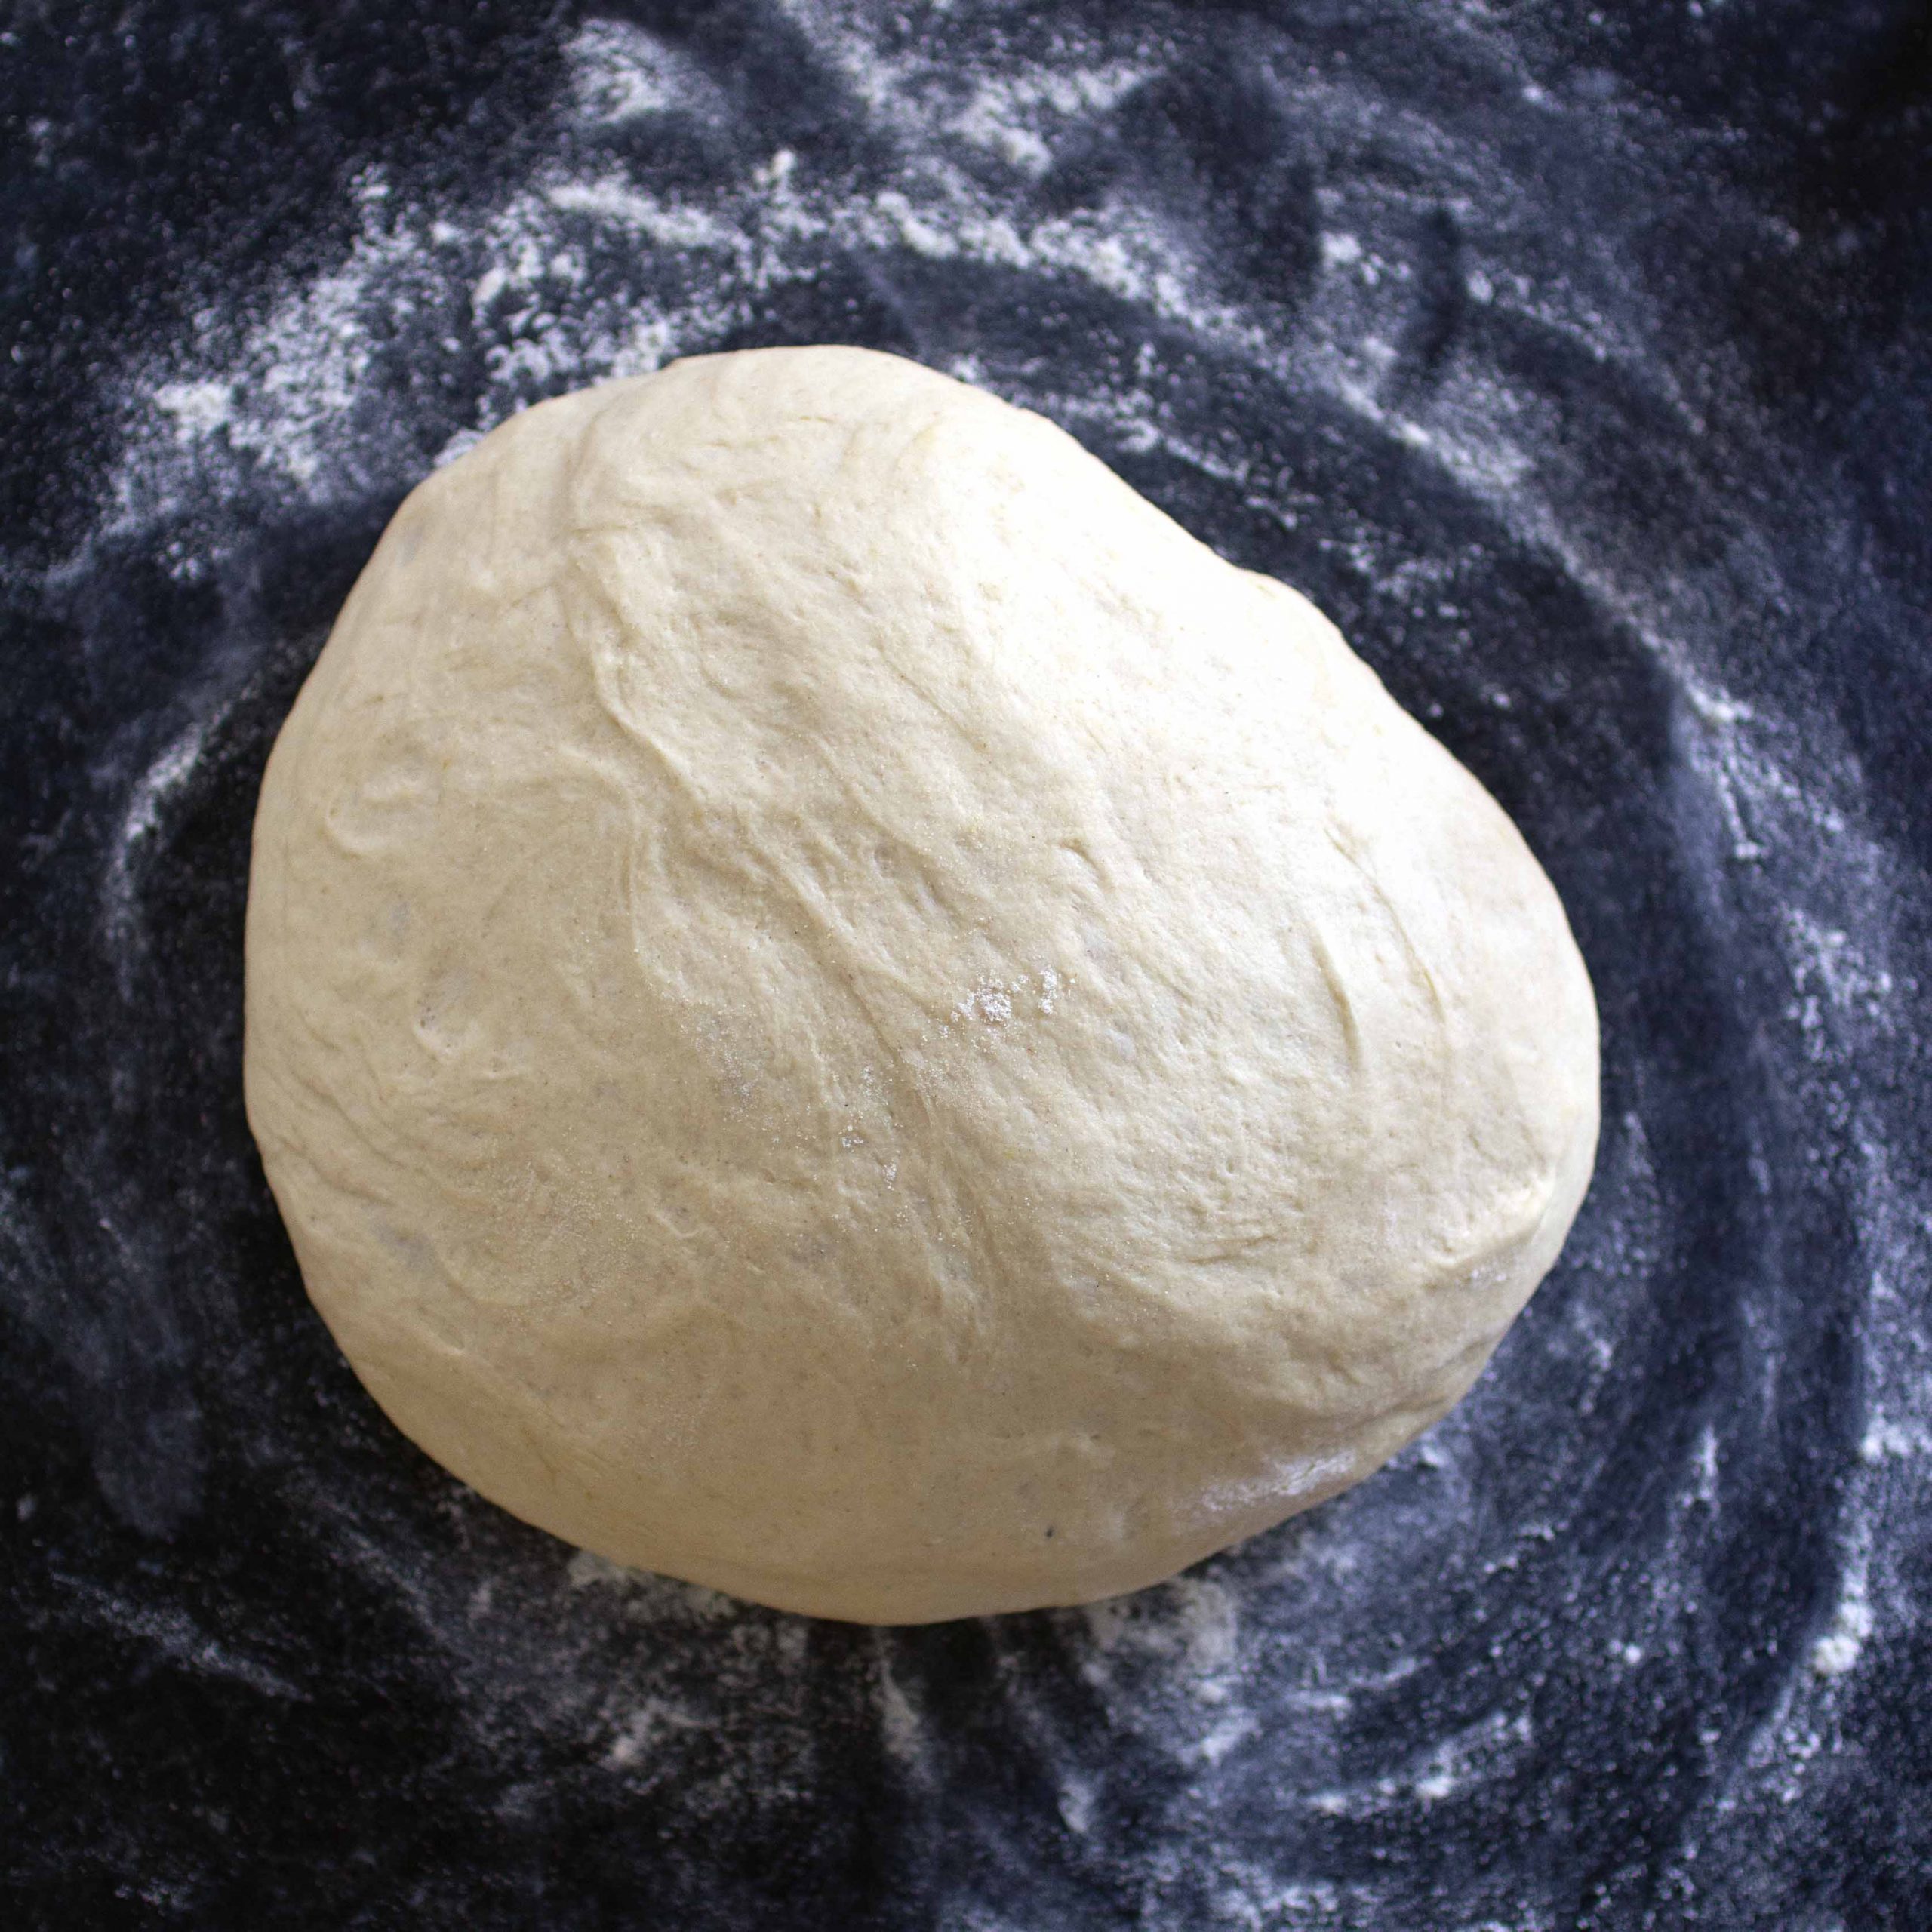 Simple Pizza Dough